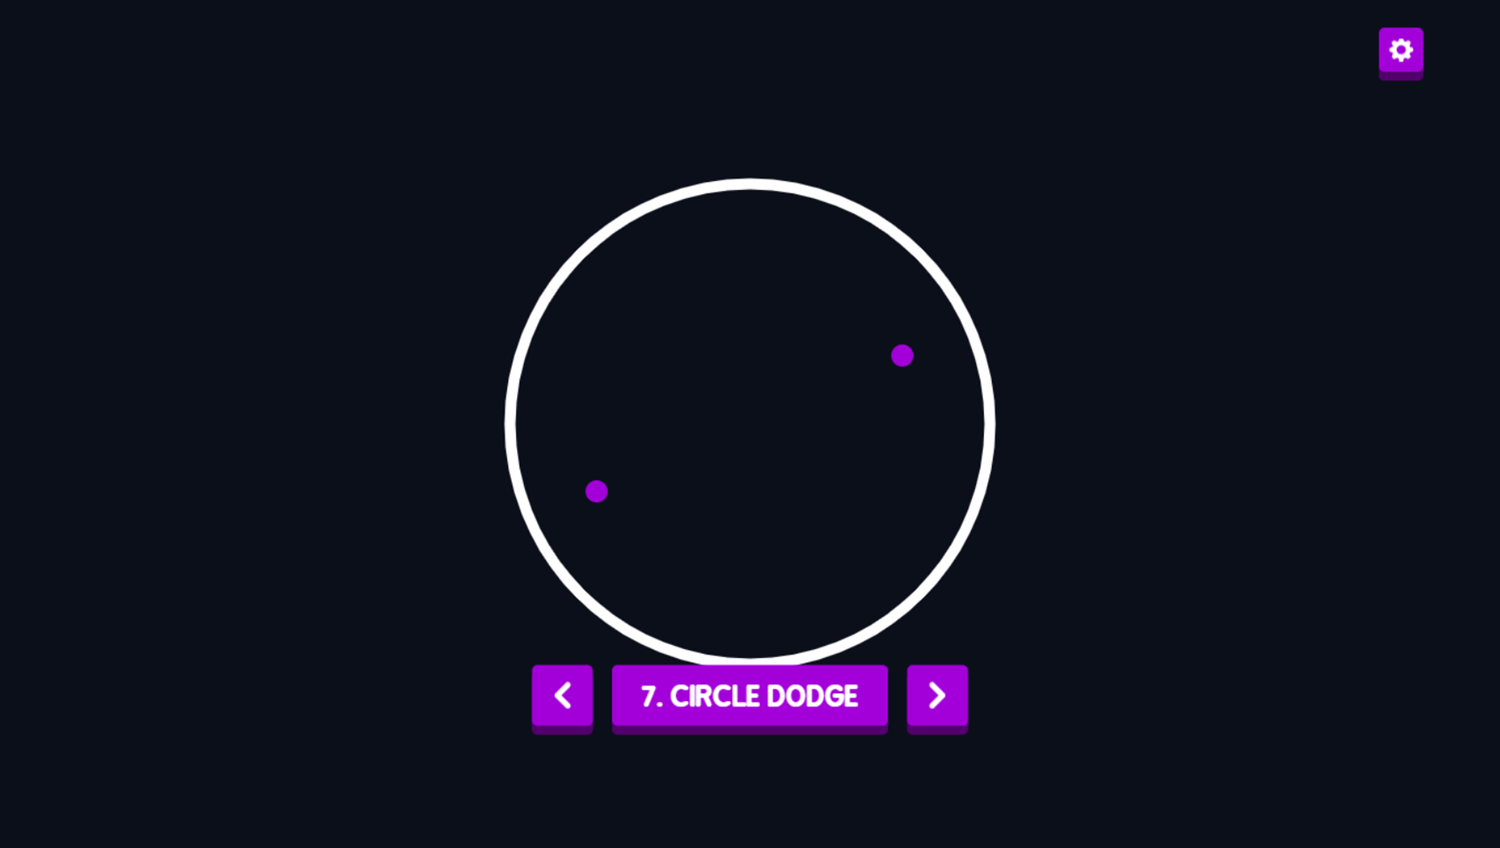 Mini Games Game 7 Circle Dodge Screenshot.